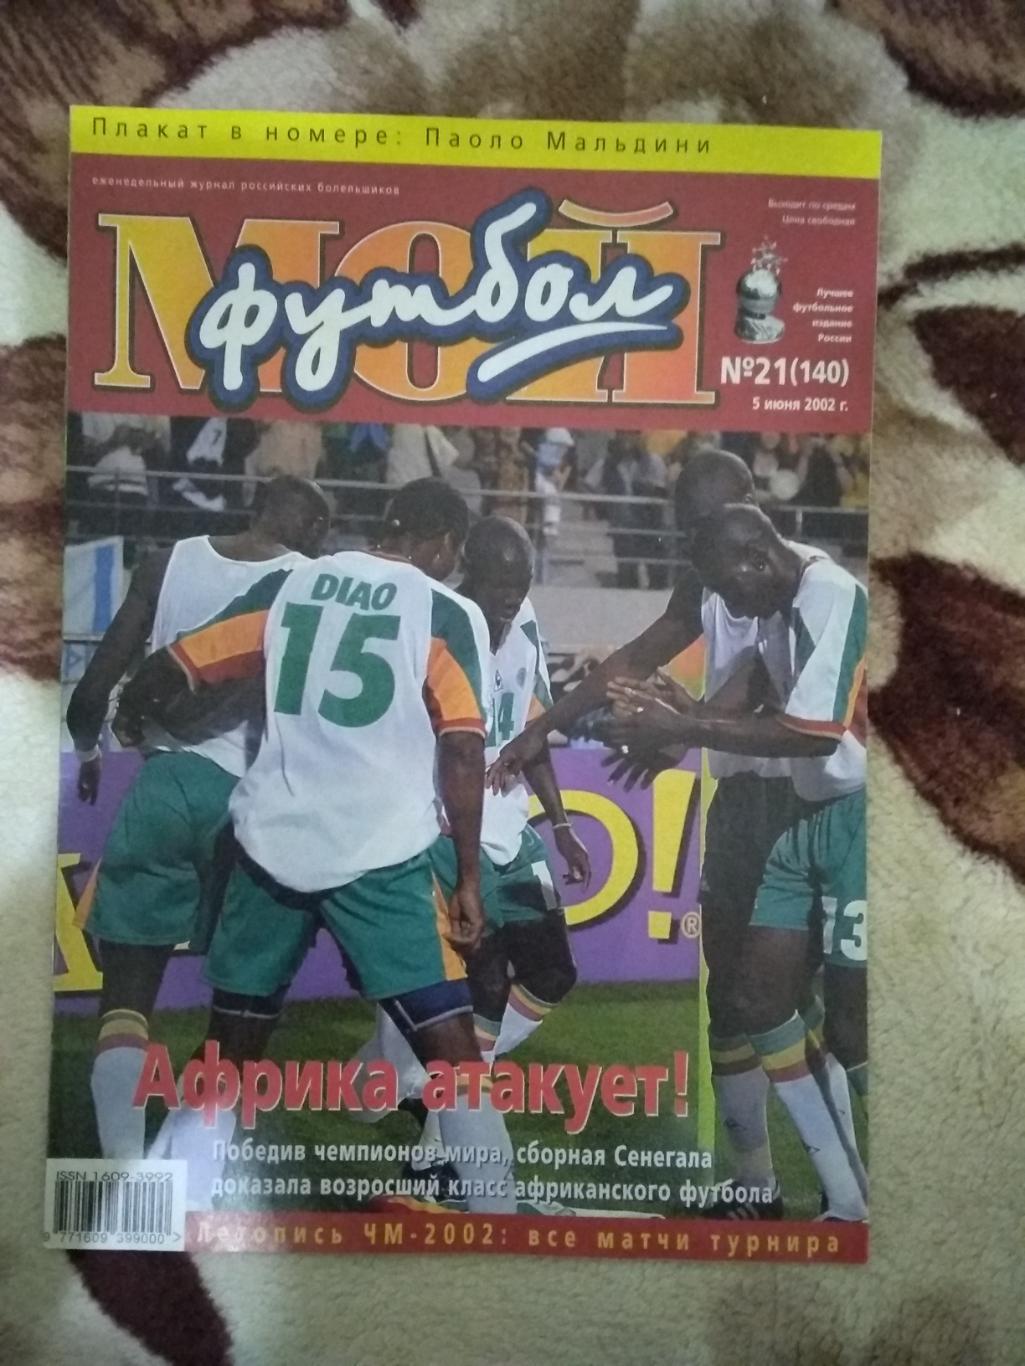 Журнал.Мой футбол №21 2002 г. (Чемпионат мира) (постер).